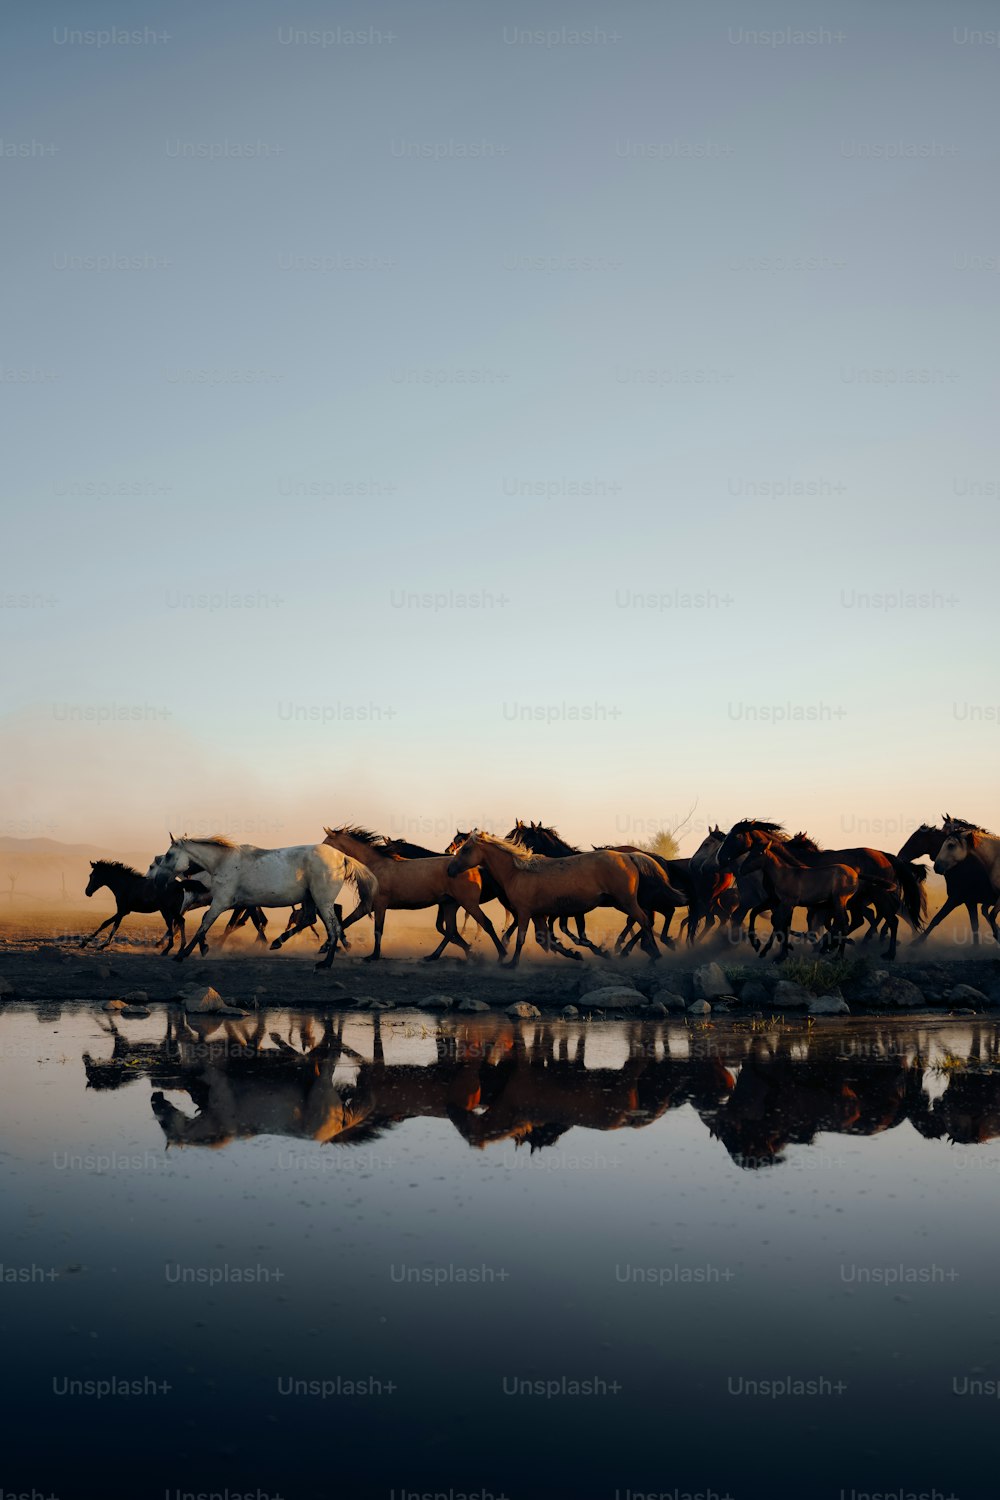 a herd of horses walking across a river